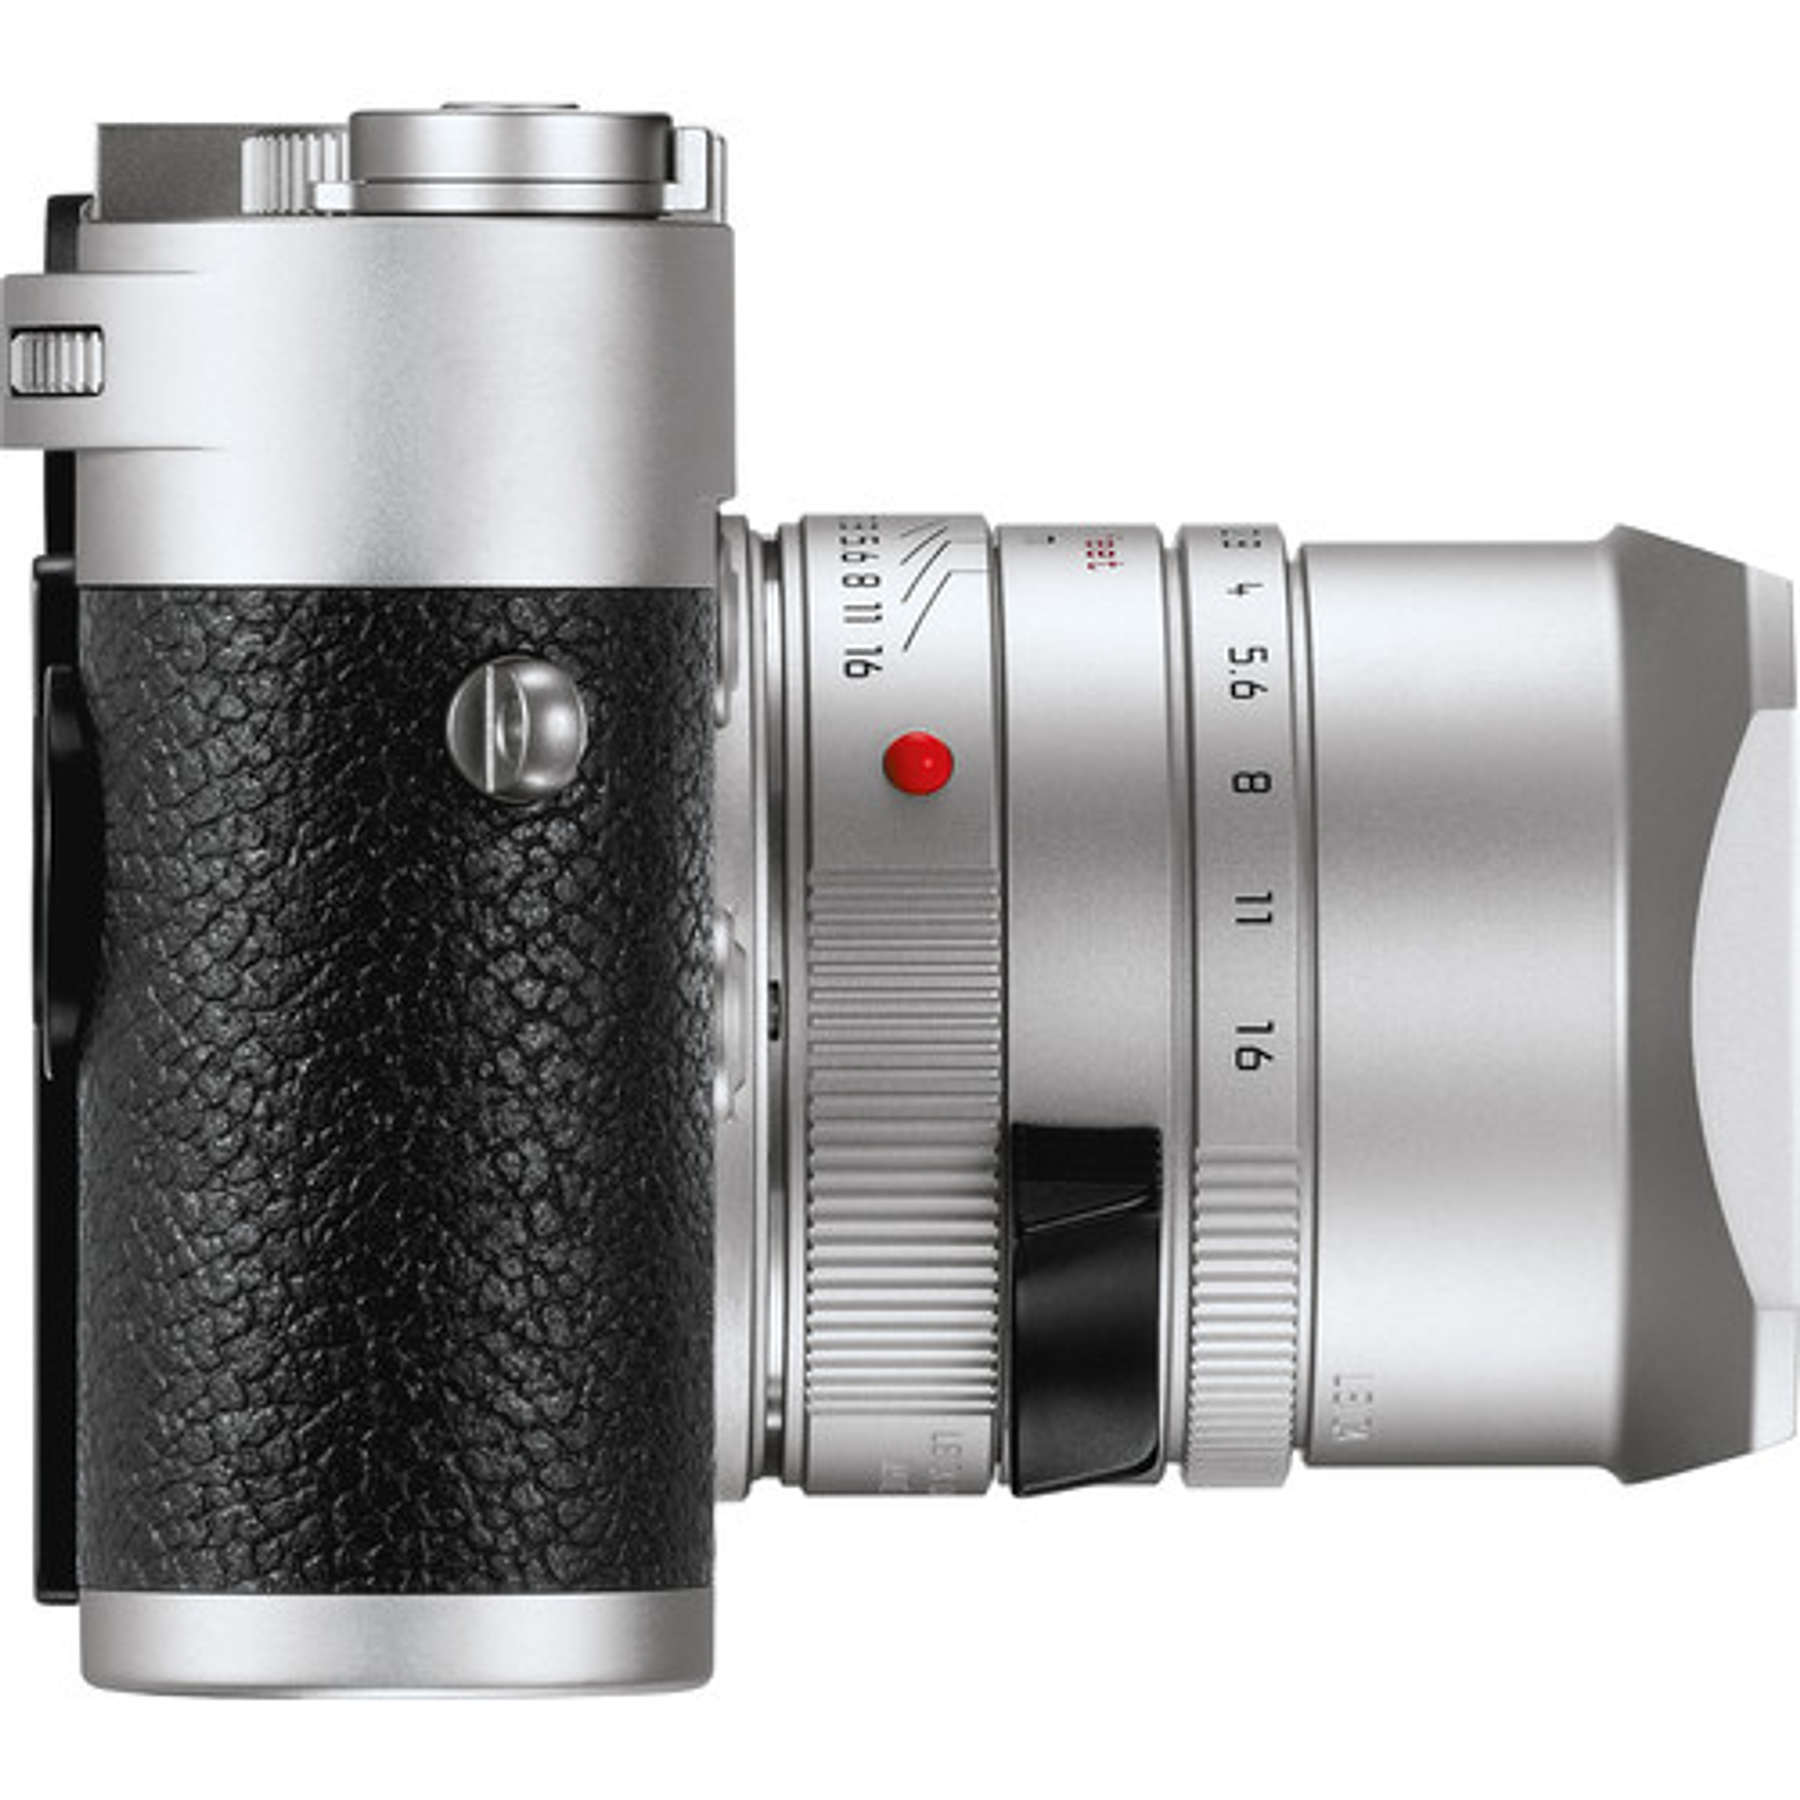 Leica M10-P Digital Rangefinder (Silver Chrome)